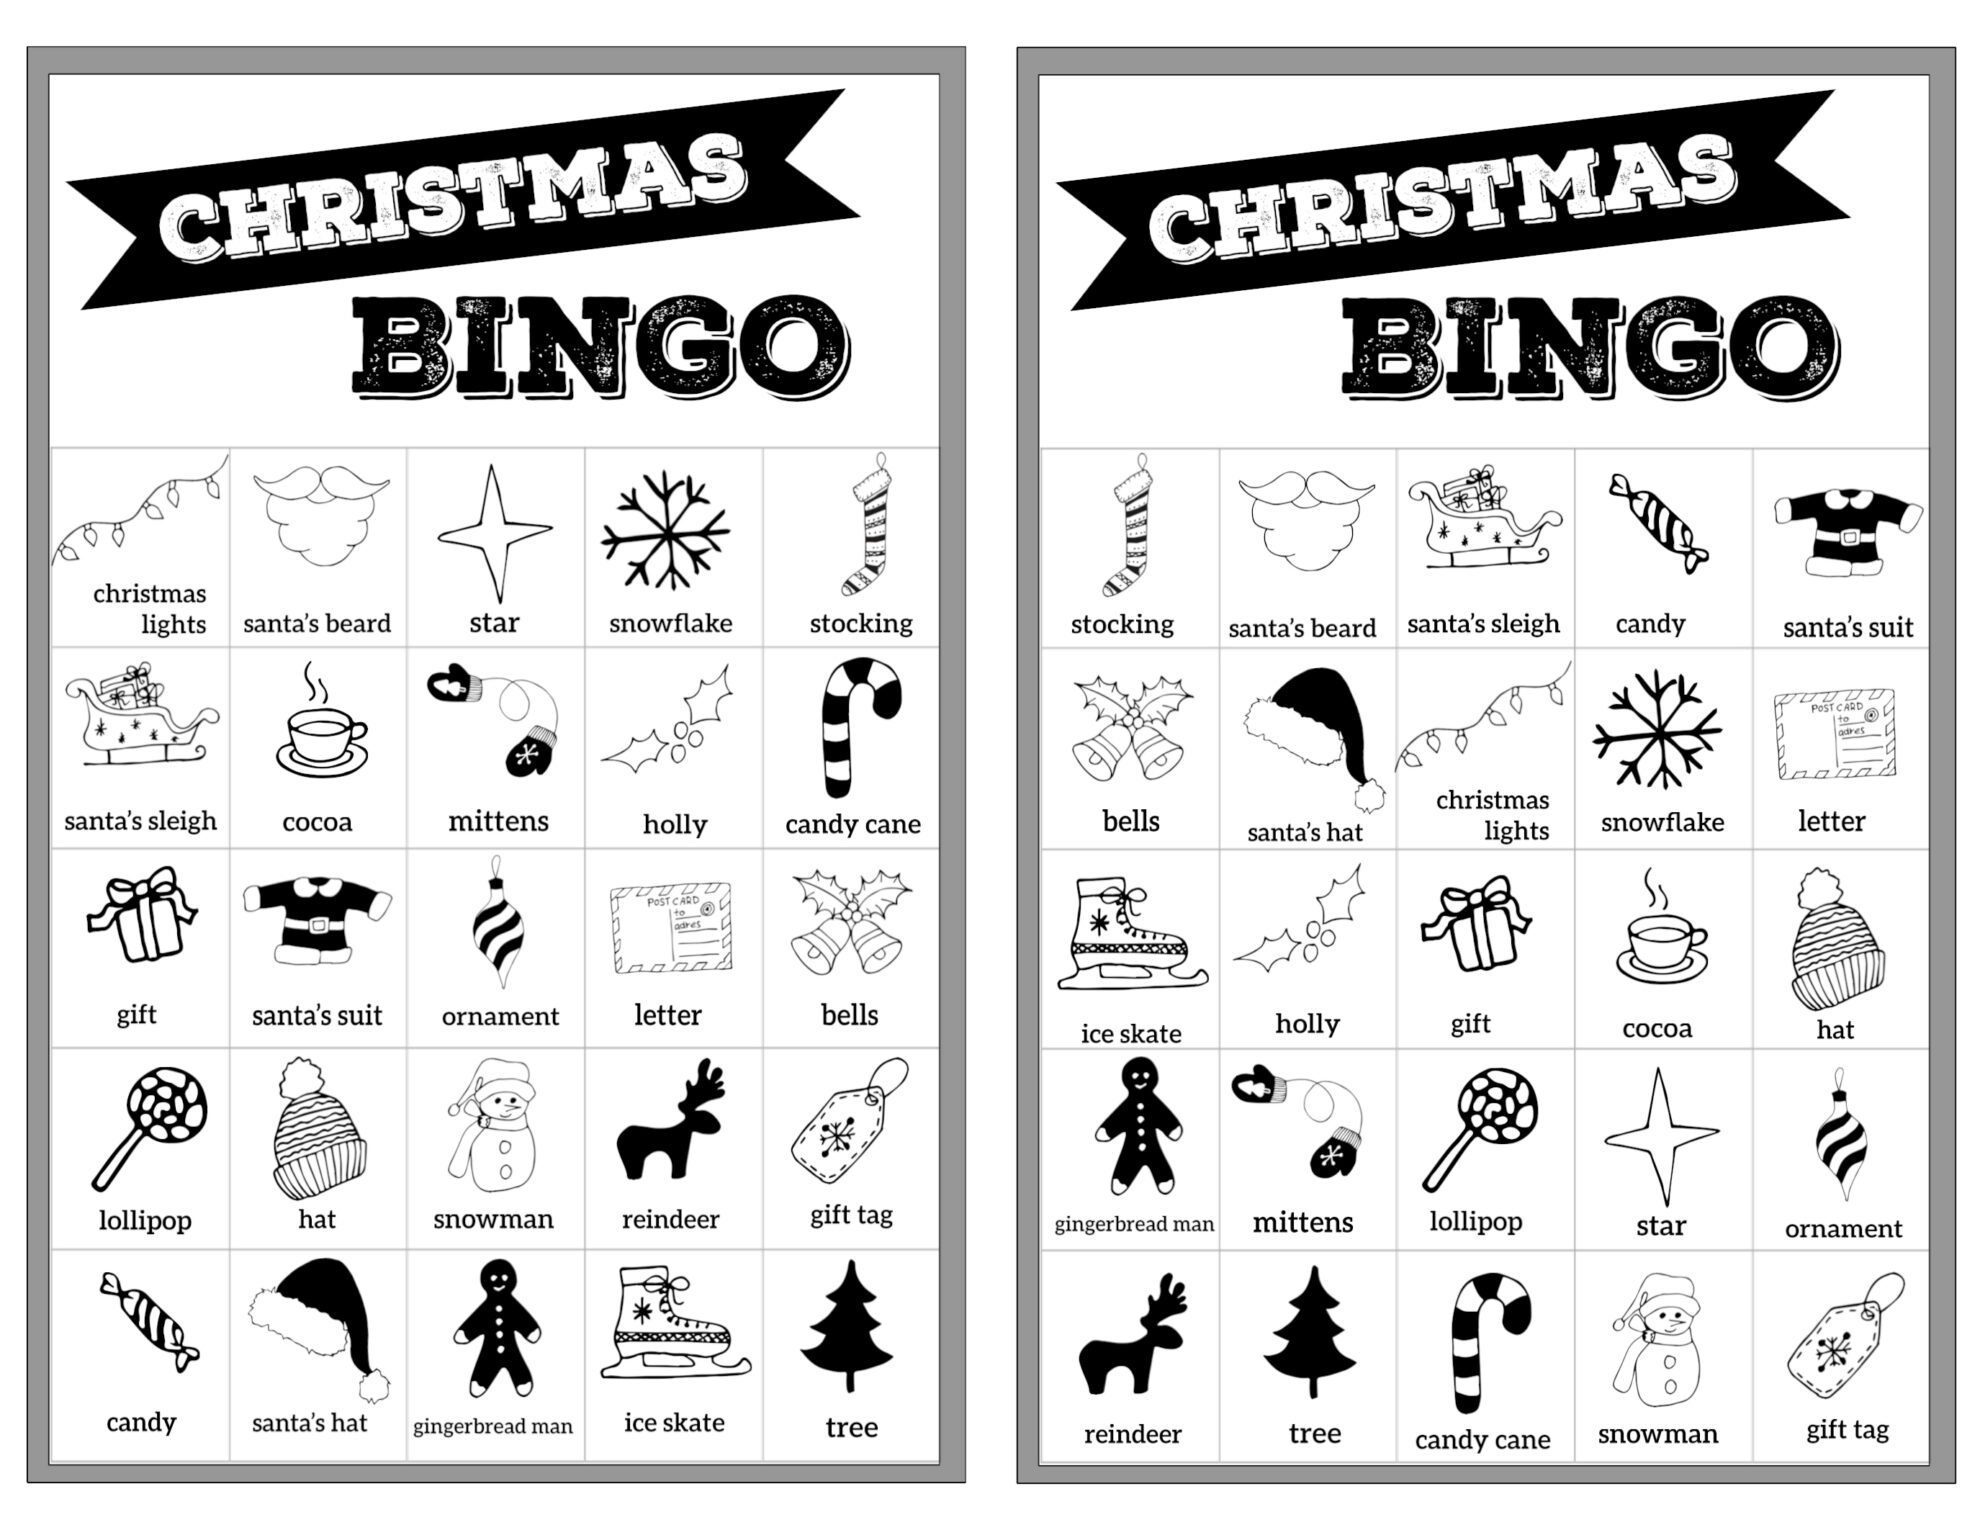 Free Christmas Bingo Printable Cards - Paper Trail Design - Free Printable Christmas Bingo Templates